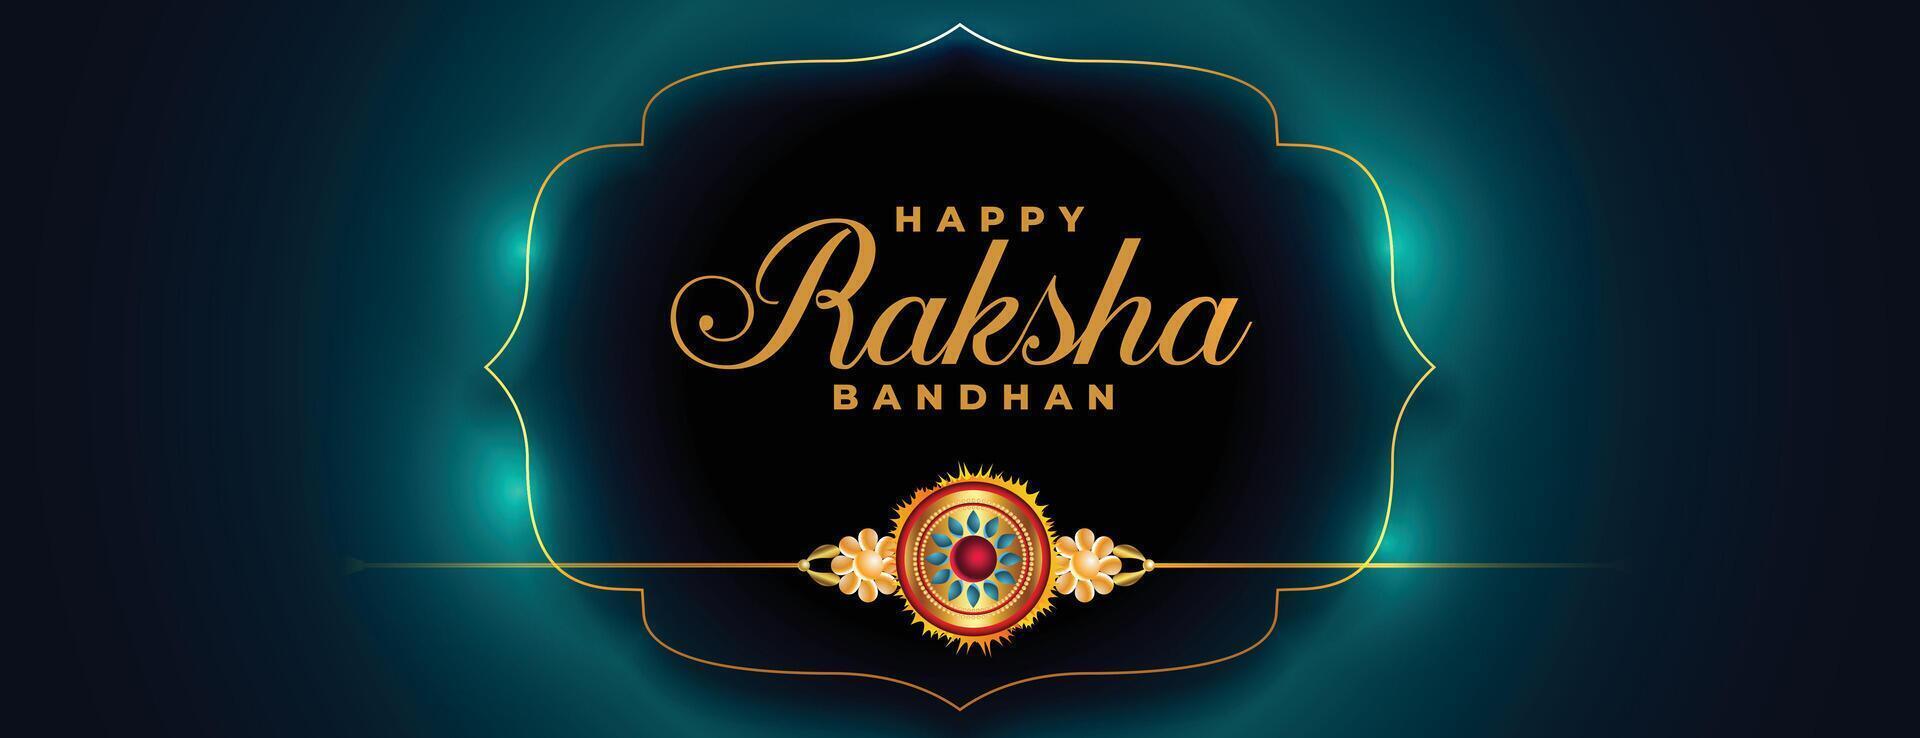 raksha bandhan beautiful banner with golden rakhi vector